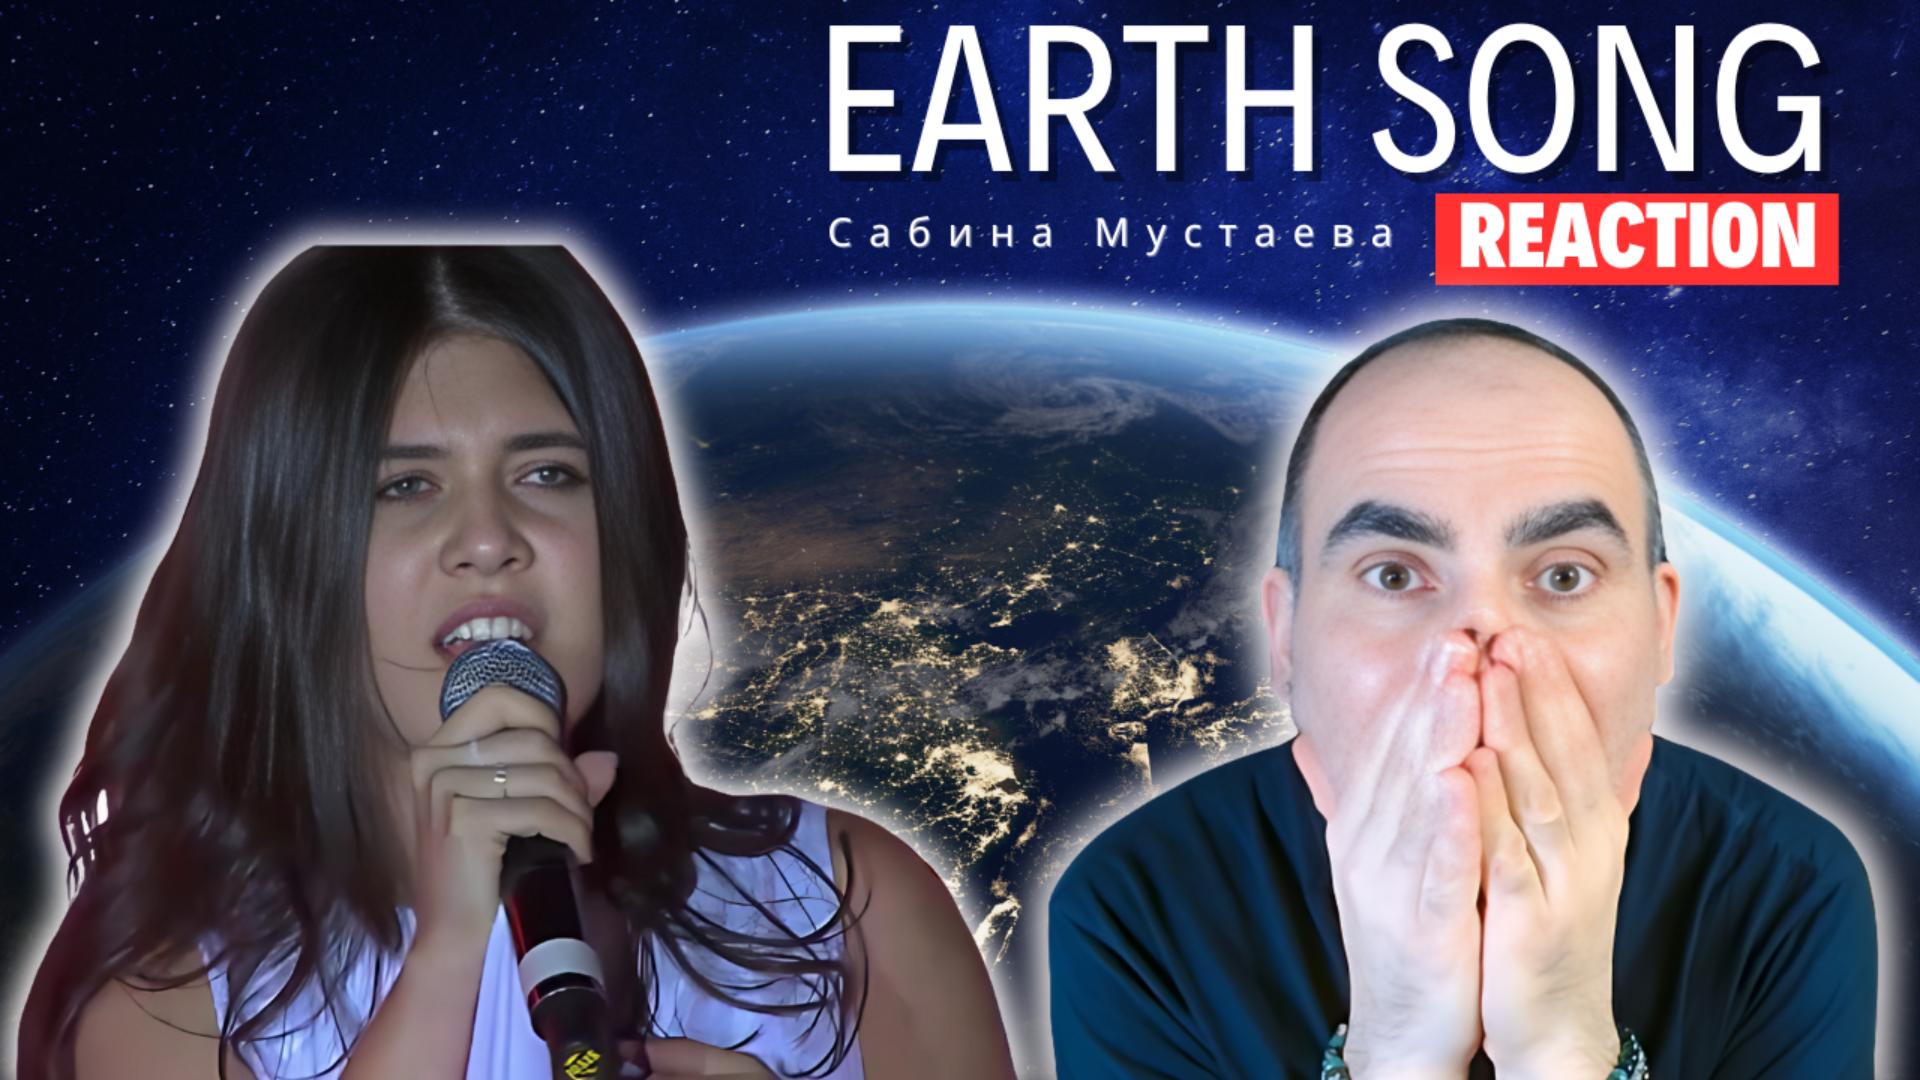 М.Джексон "Earth song" ("Песня Земли") исполняет Сабина Мустаева ║ Réaction Française !